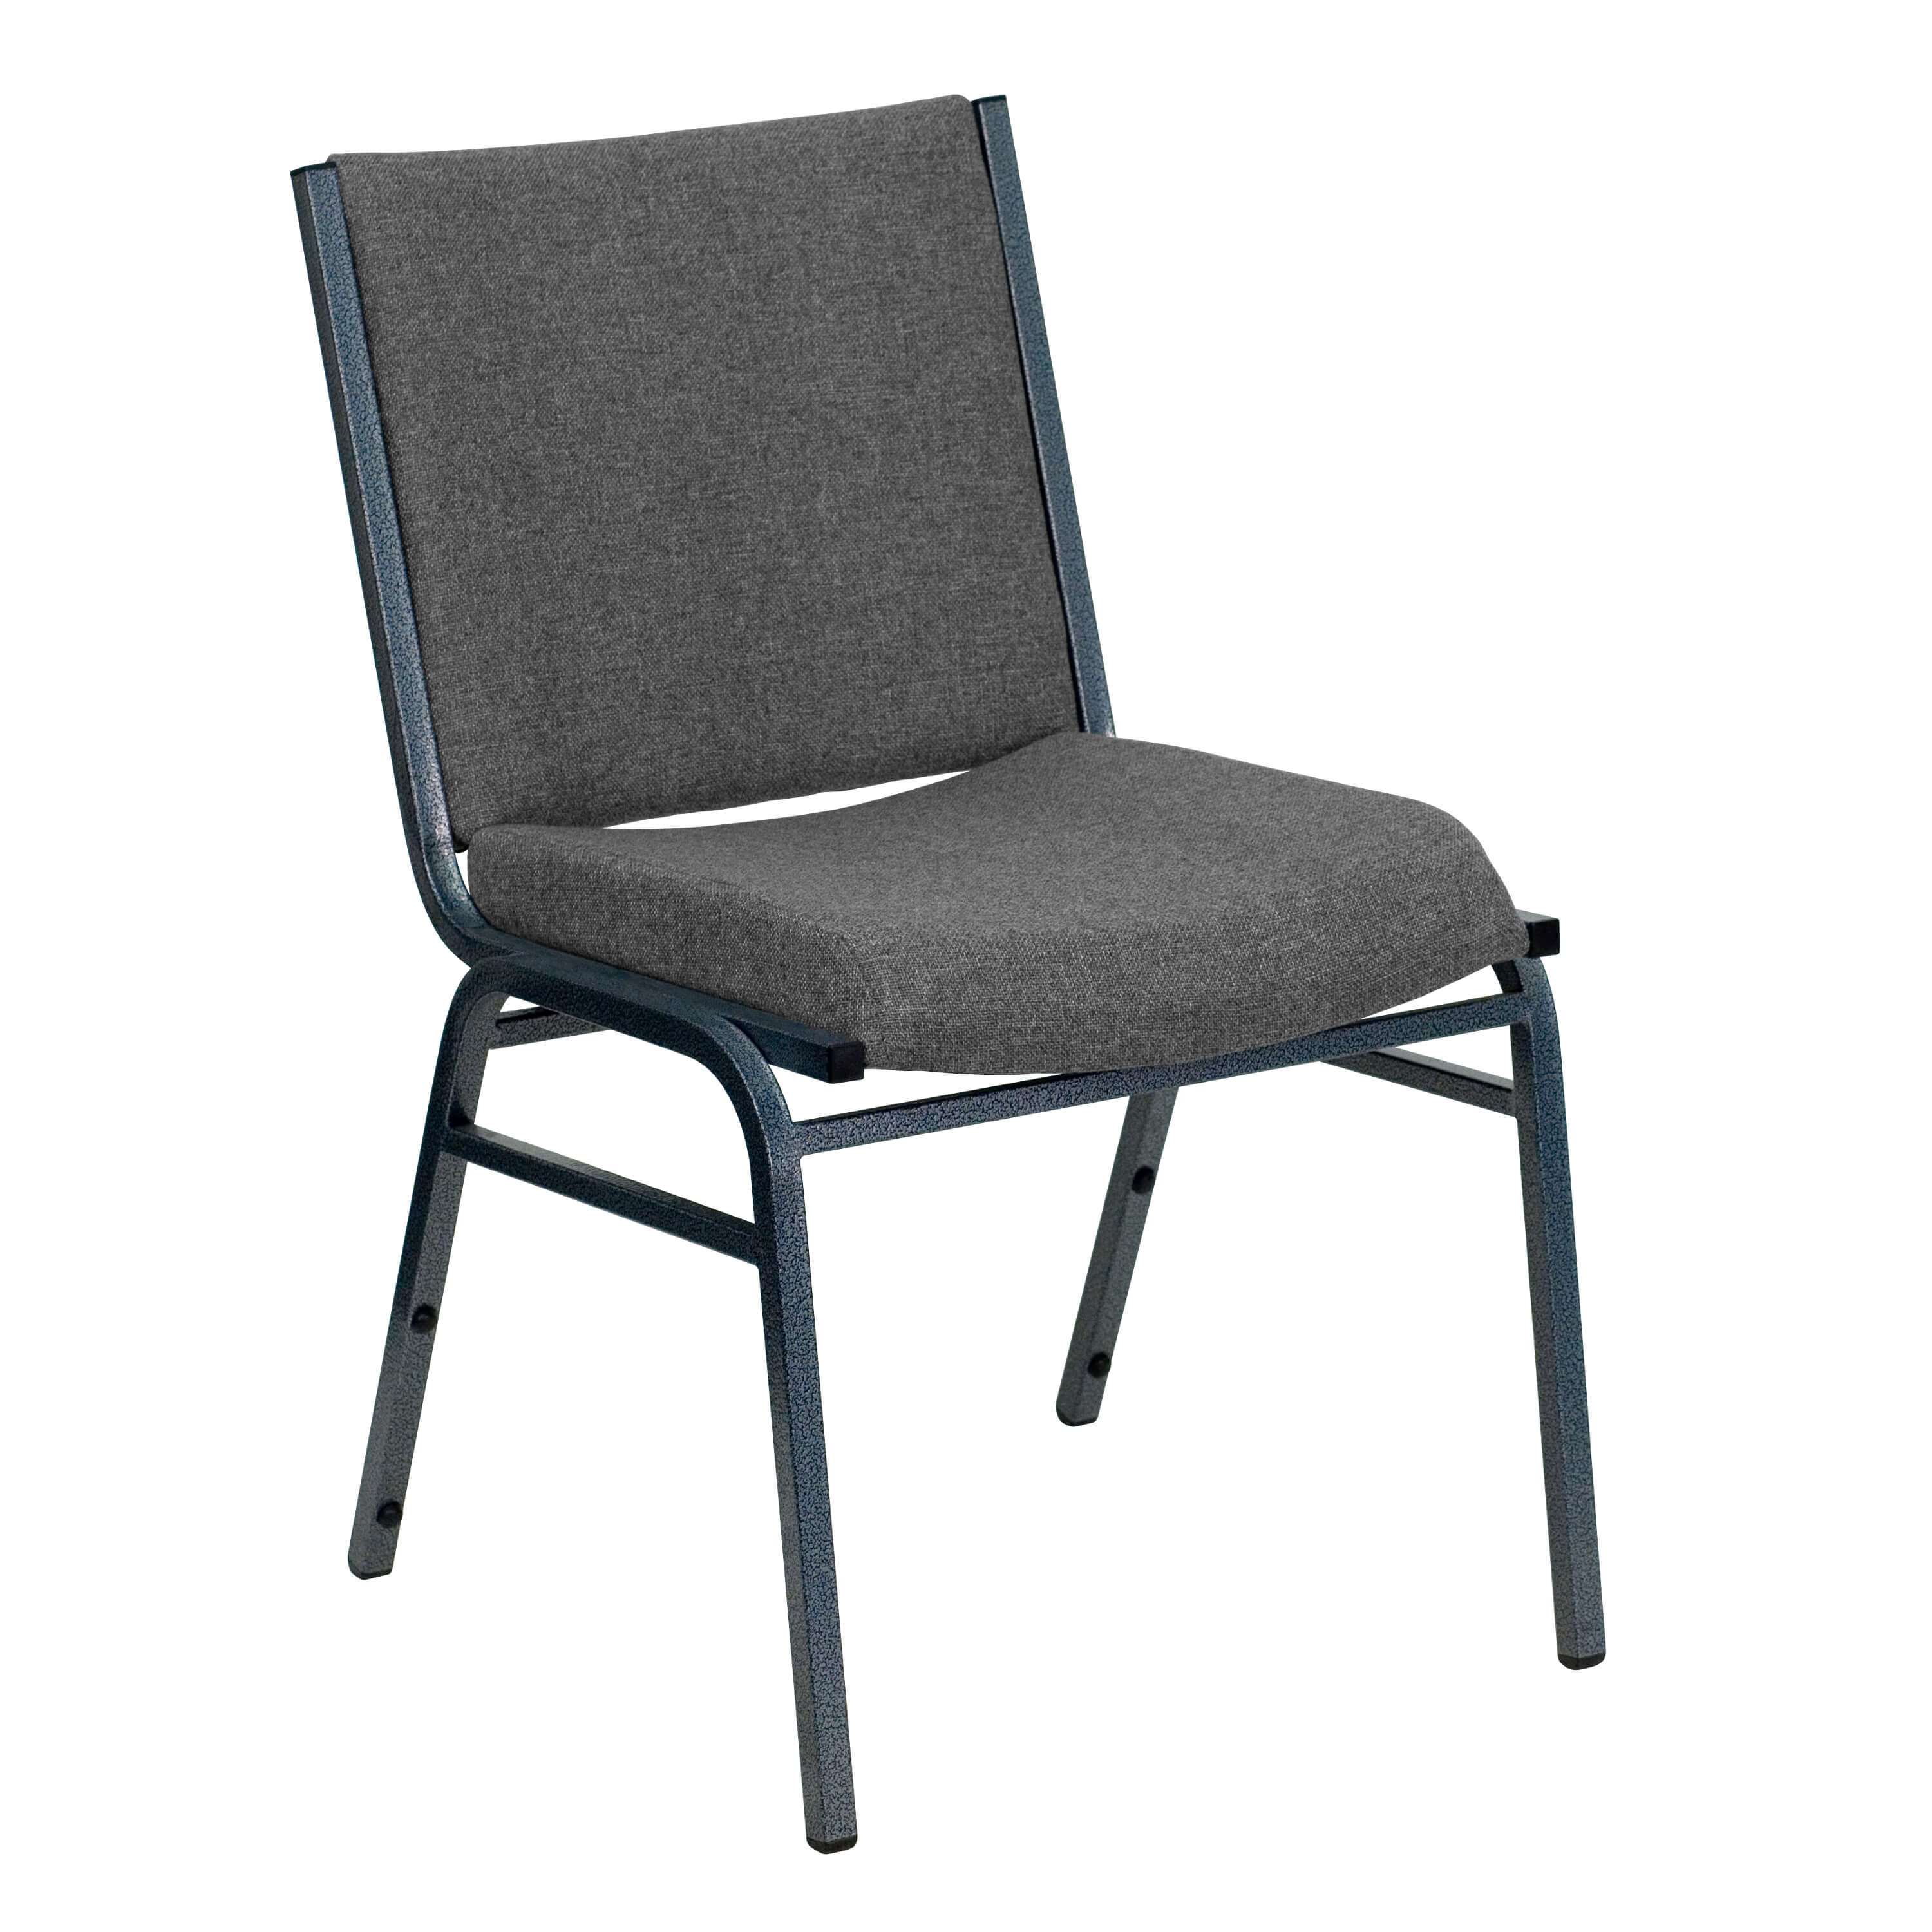 Stackable chairs CUB XU 60153 GY GG FLA